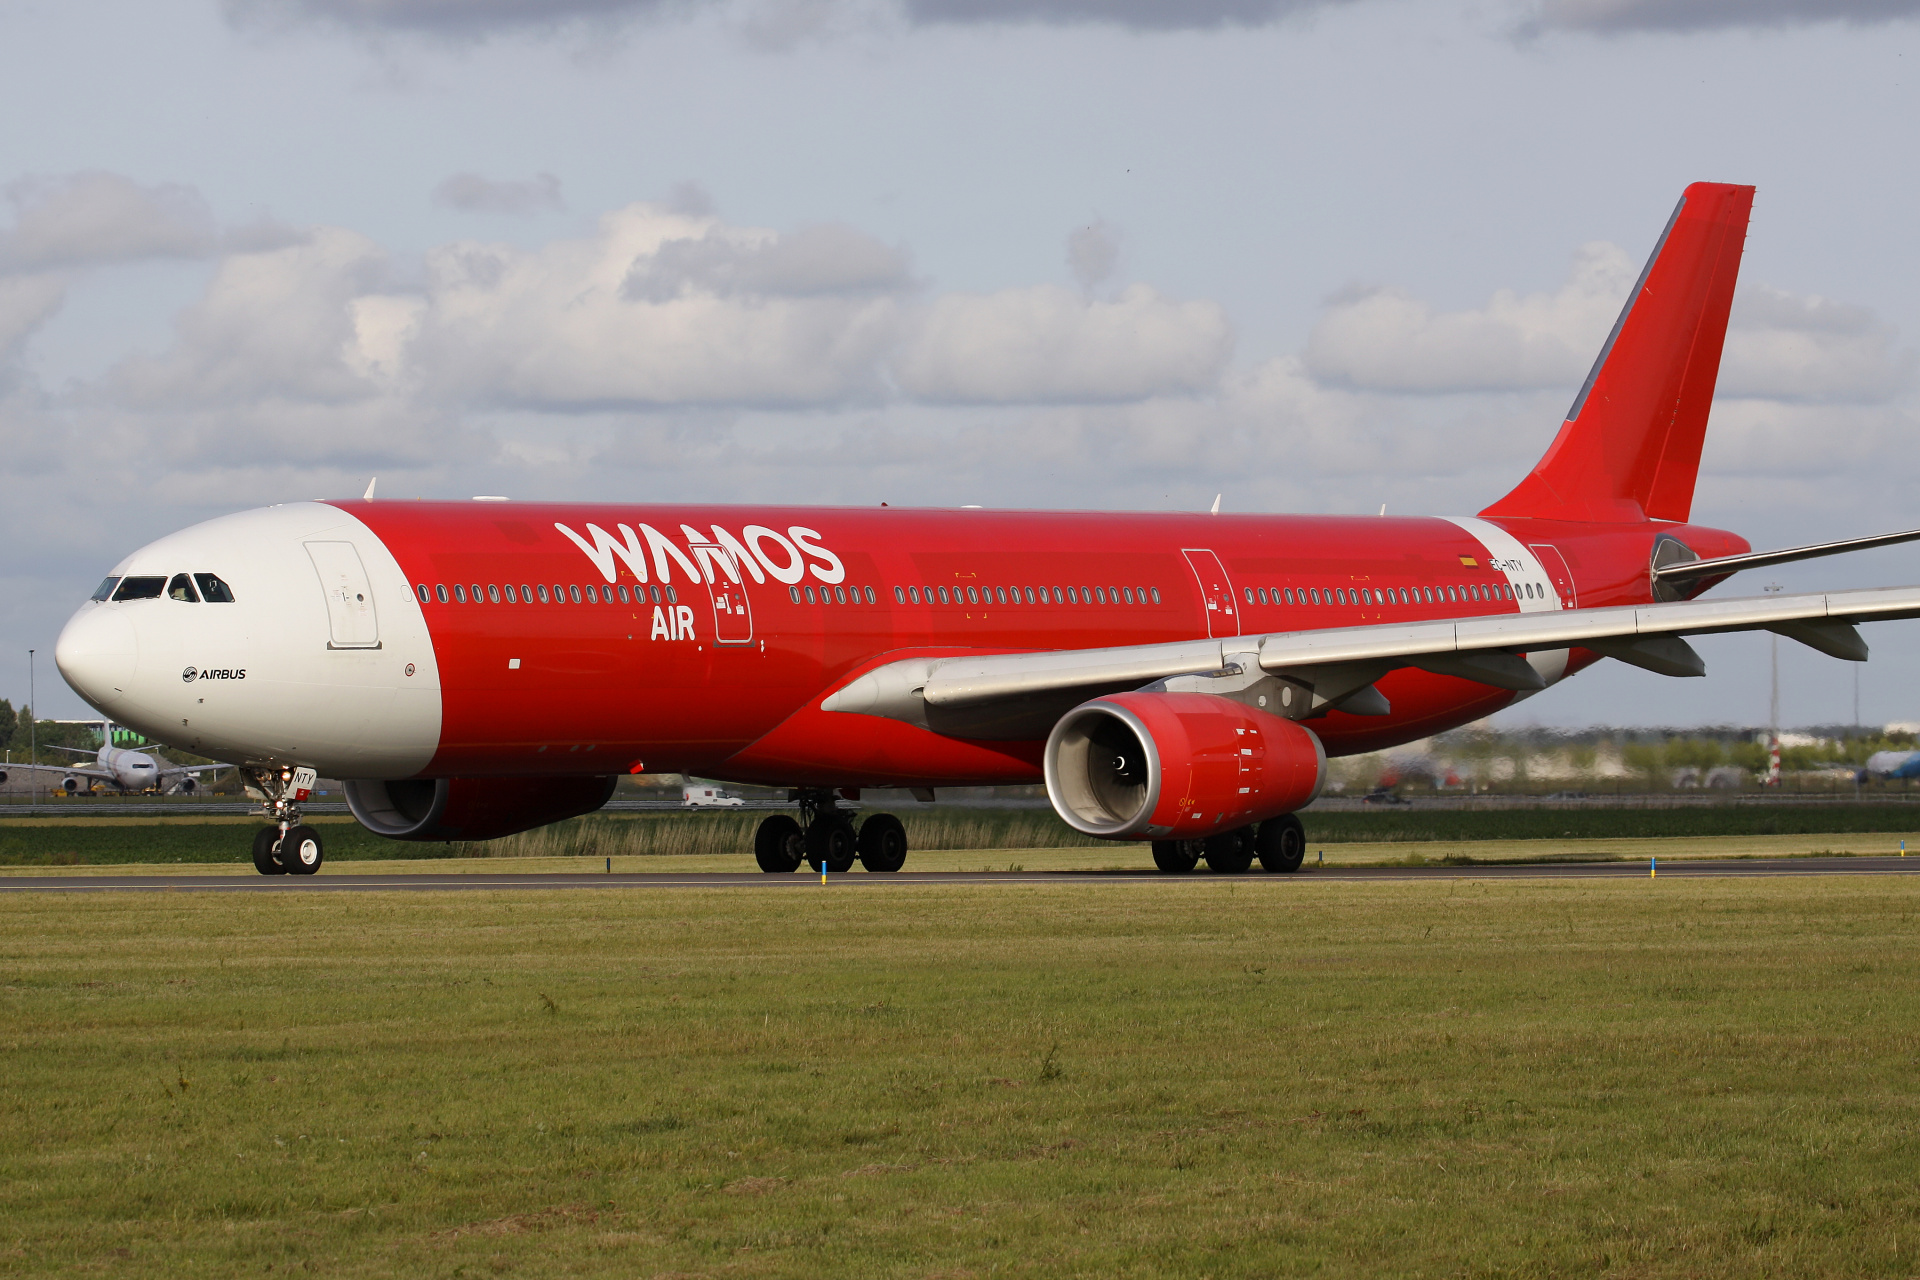 EC-NTY, Wamos Air (Aircraft » Schiphol Spotting » Airbus A330-300)